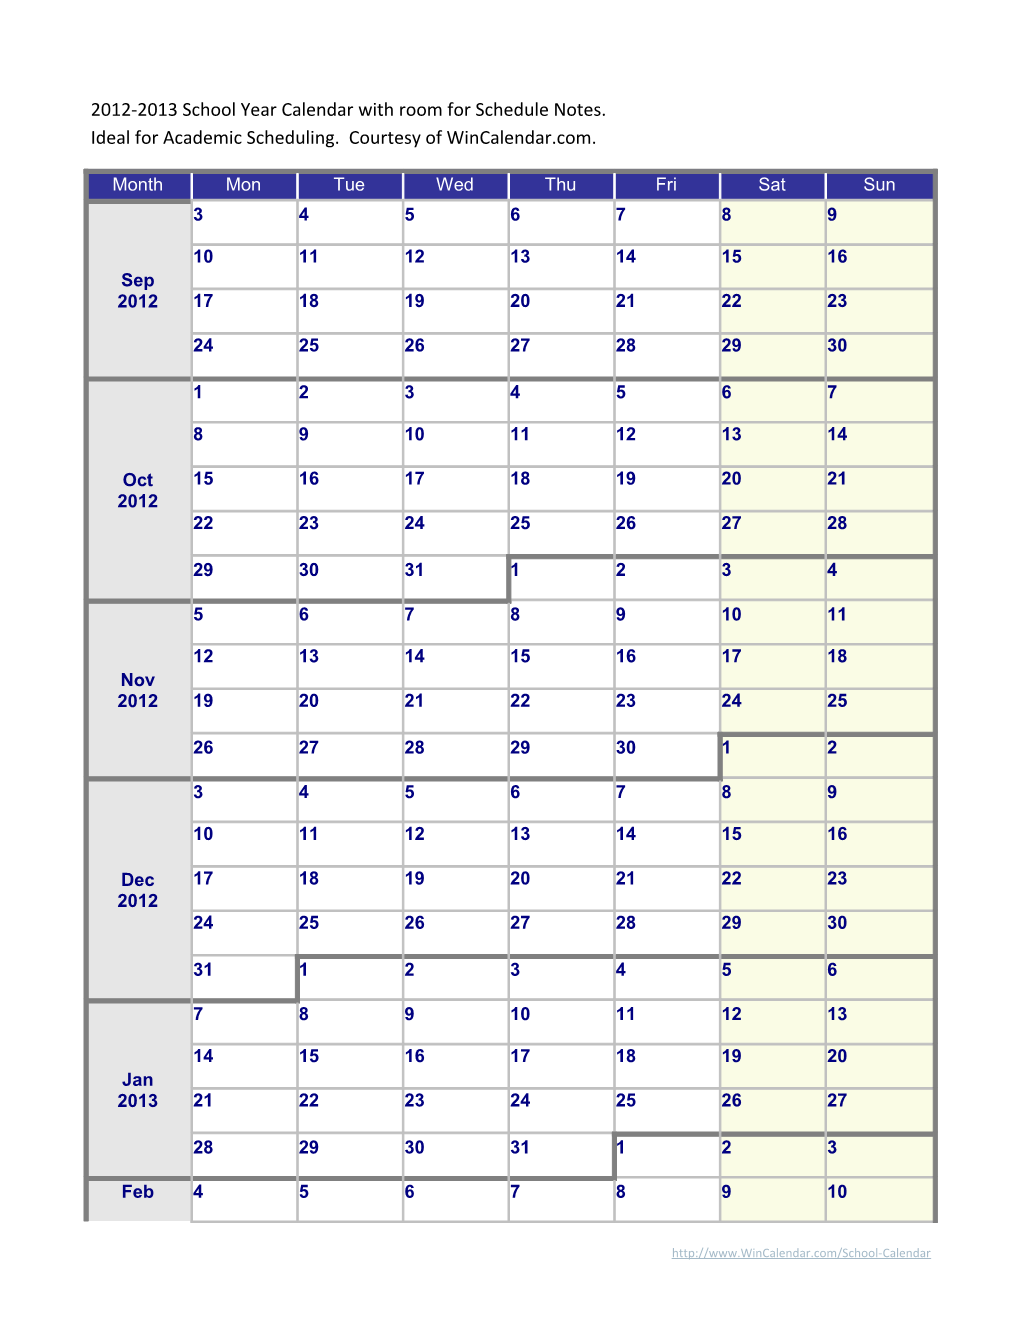 More Free Calendars: Academic Calendars, Holiday Calendar, Schedule Calendar